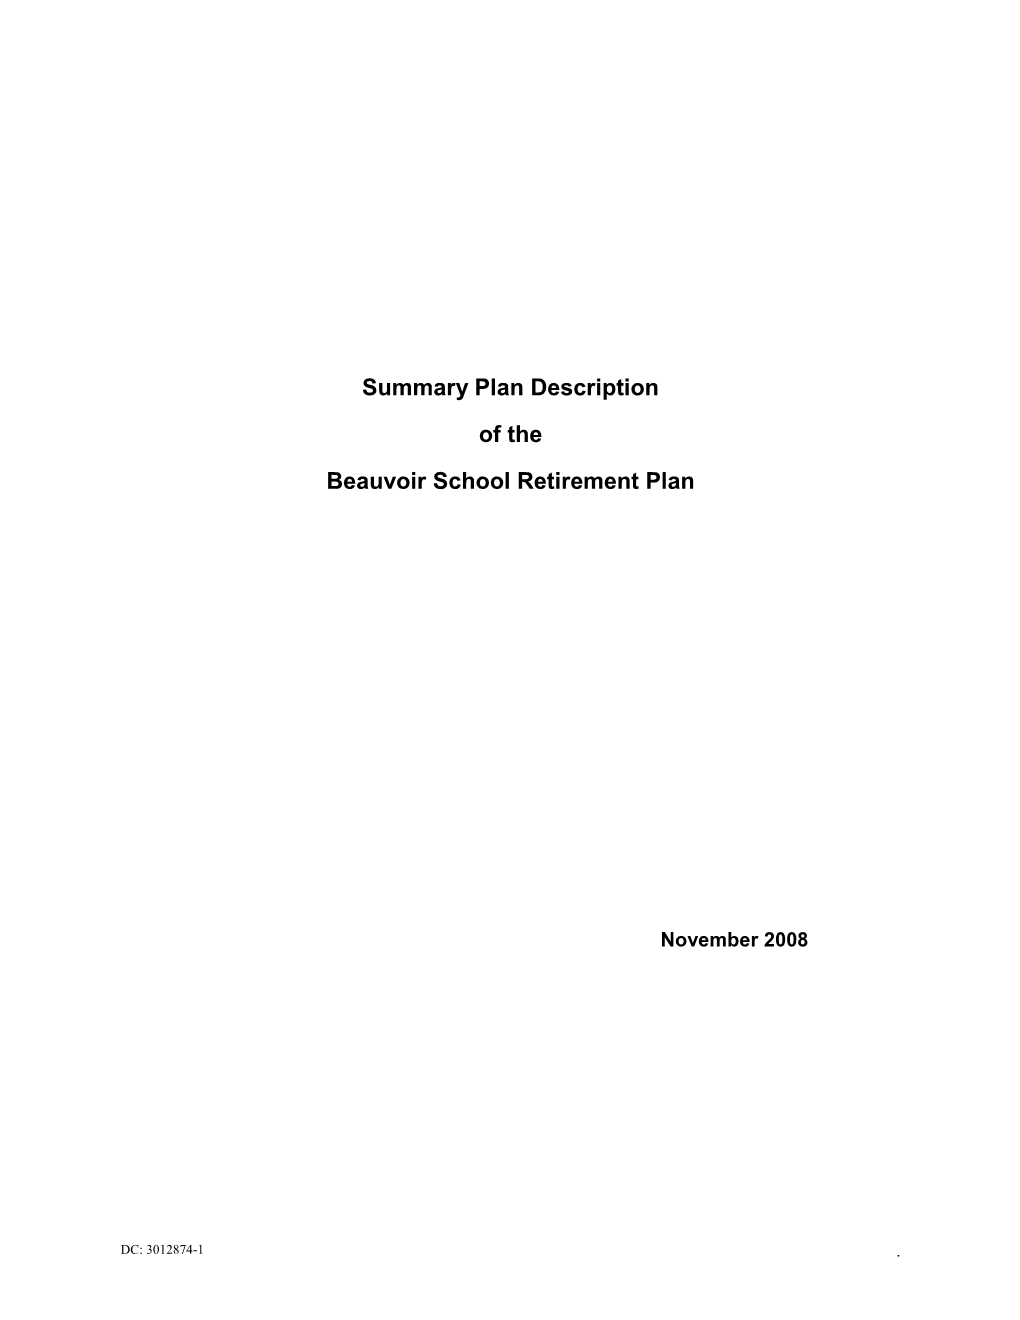 Summary Plan Description of the Beauvoir School Retirement Plan